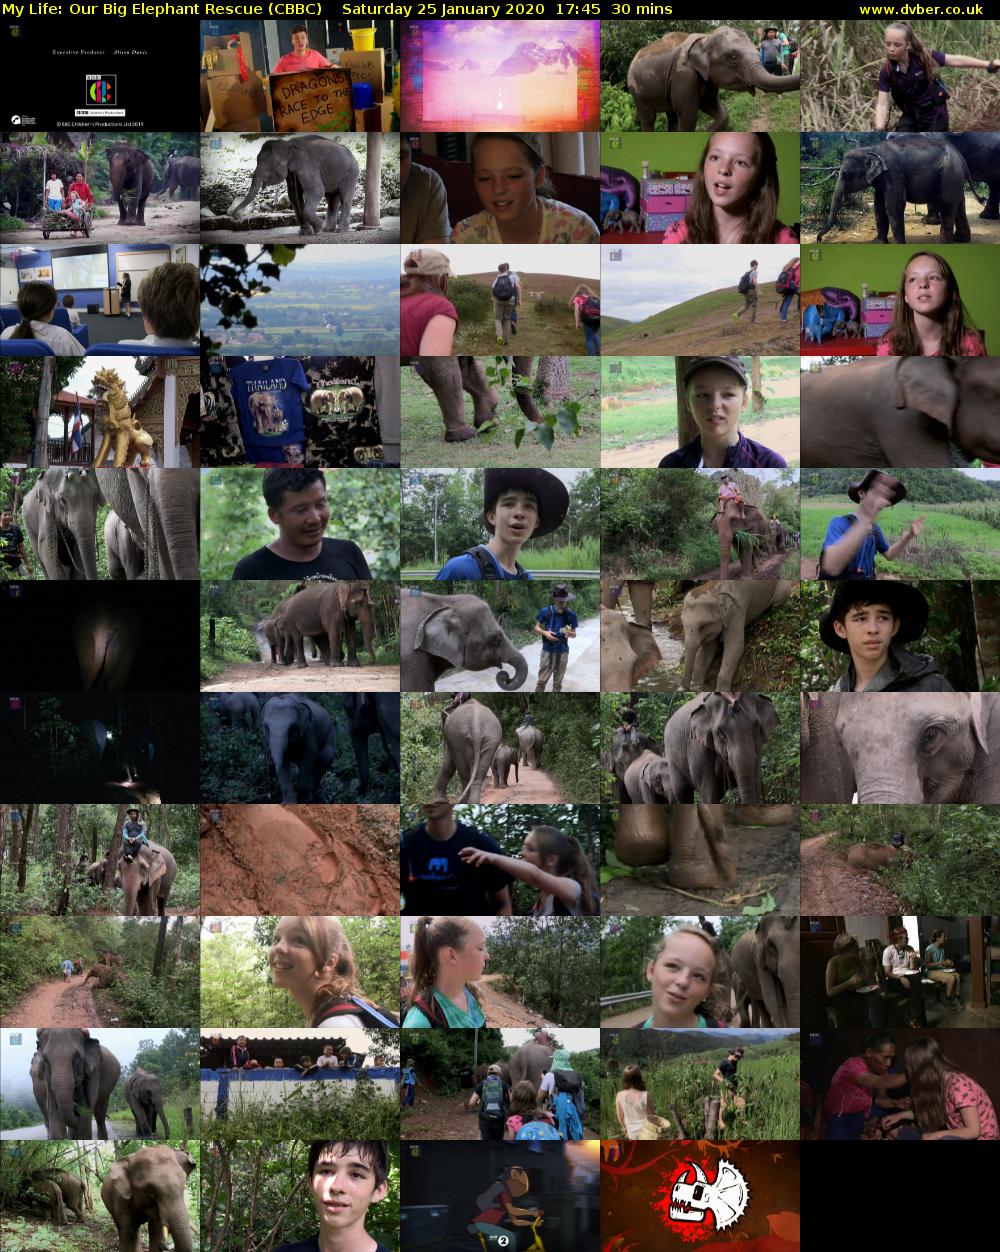 My Life: Our Big Elephant Rescue (CBBC) Saturday 25 January 2020 17:45 - 18:15